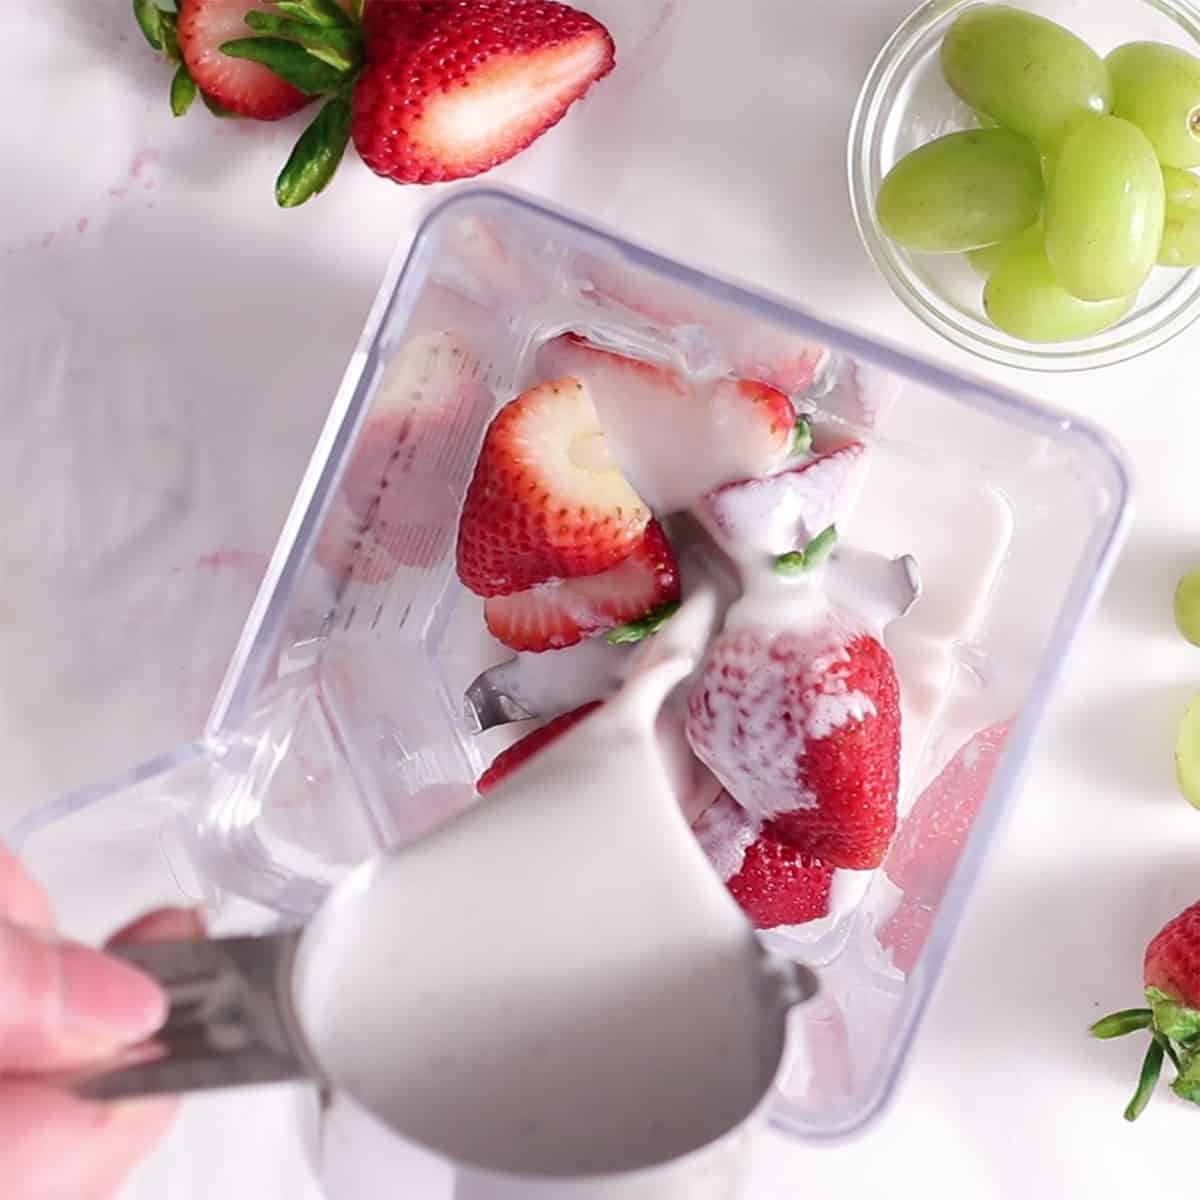 strawberries and milk in a blender jar.